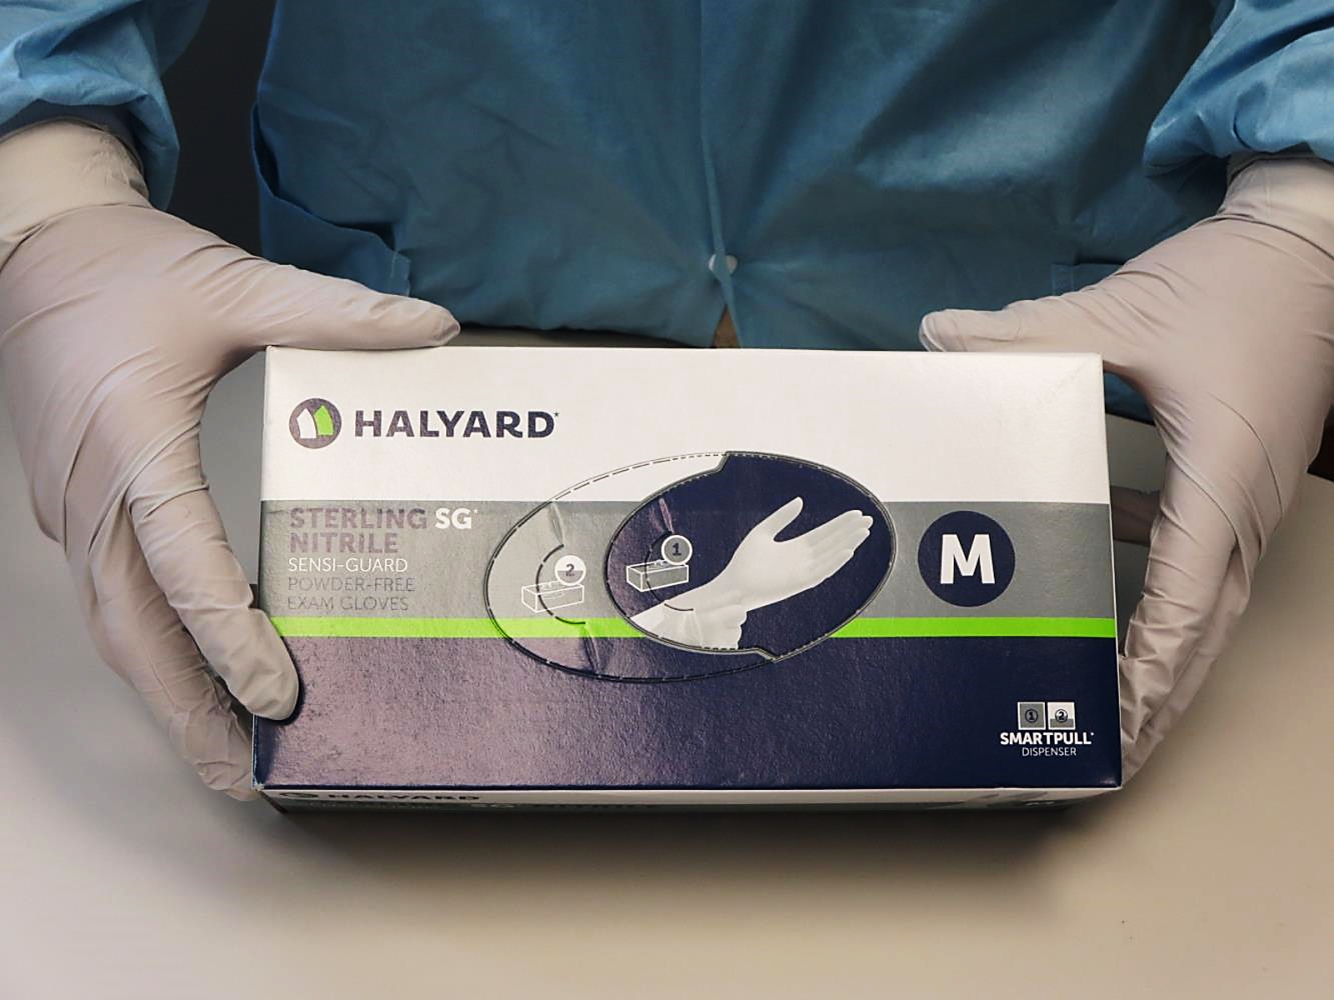 Halyard®Health Sterling SG sensing - guard一次性无粉乳胶丁腈检查手套